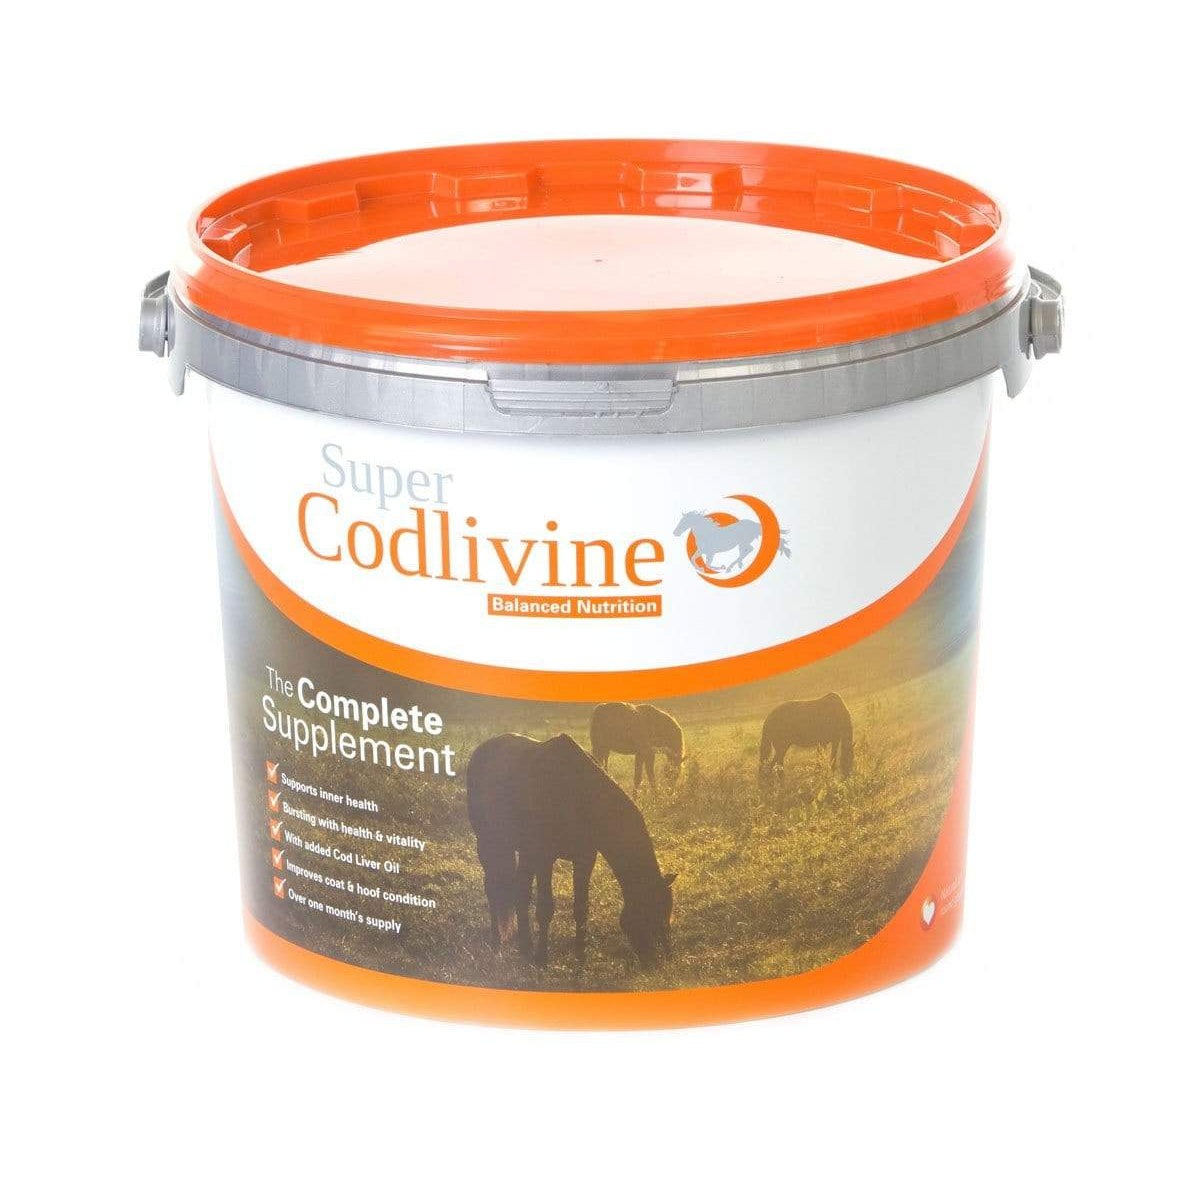 Super Codlivine The Complete Supplement